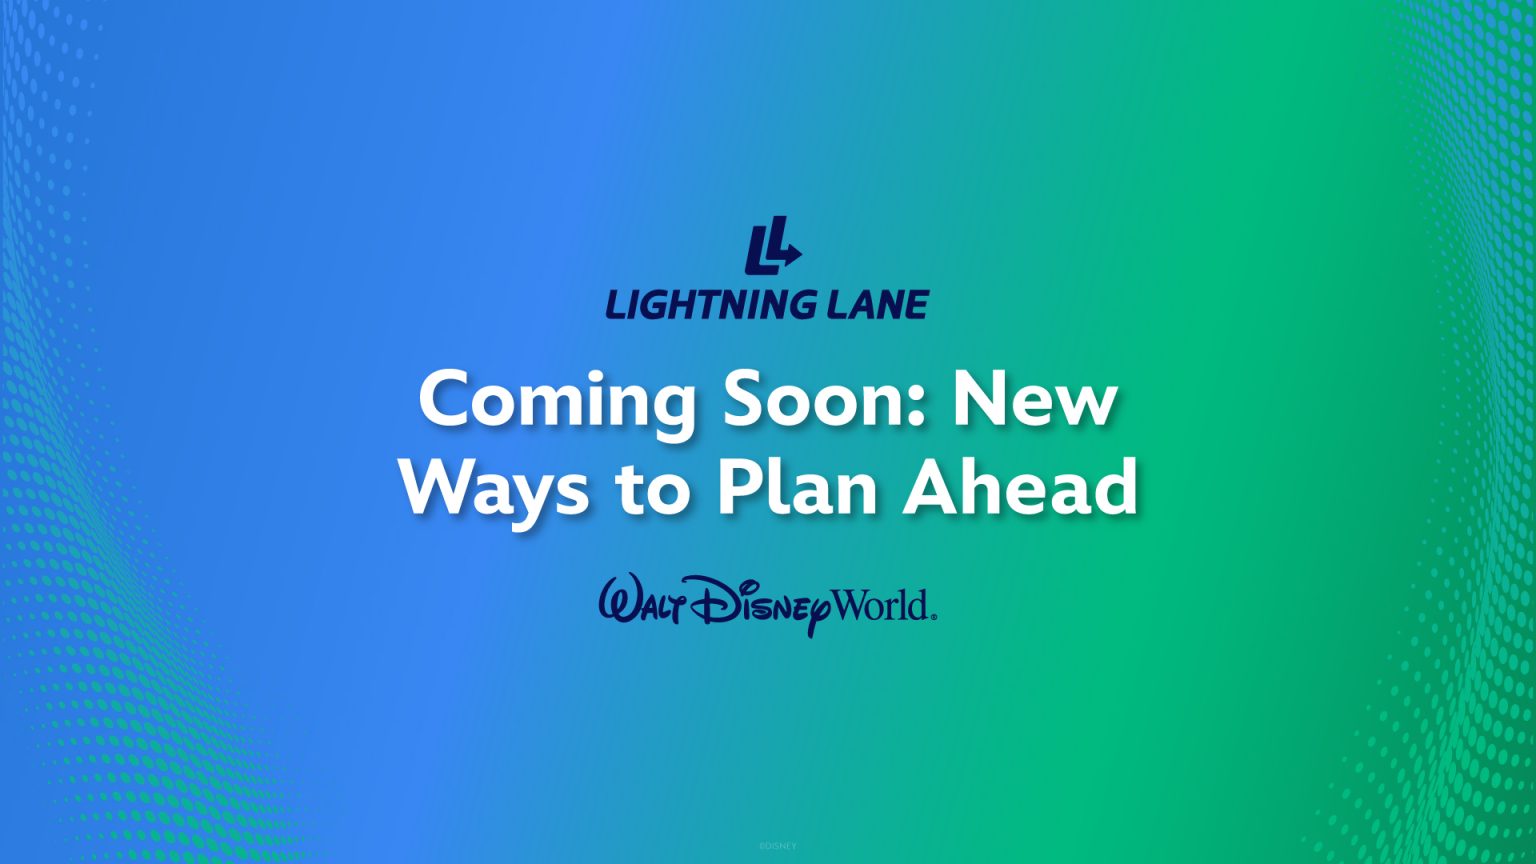 Lightning Lane Entry at Walt Disney World